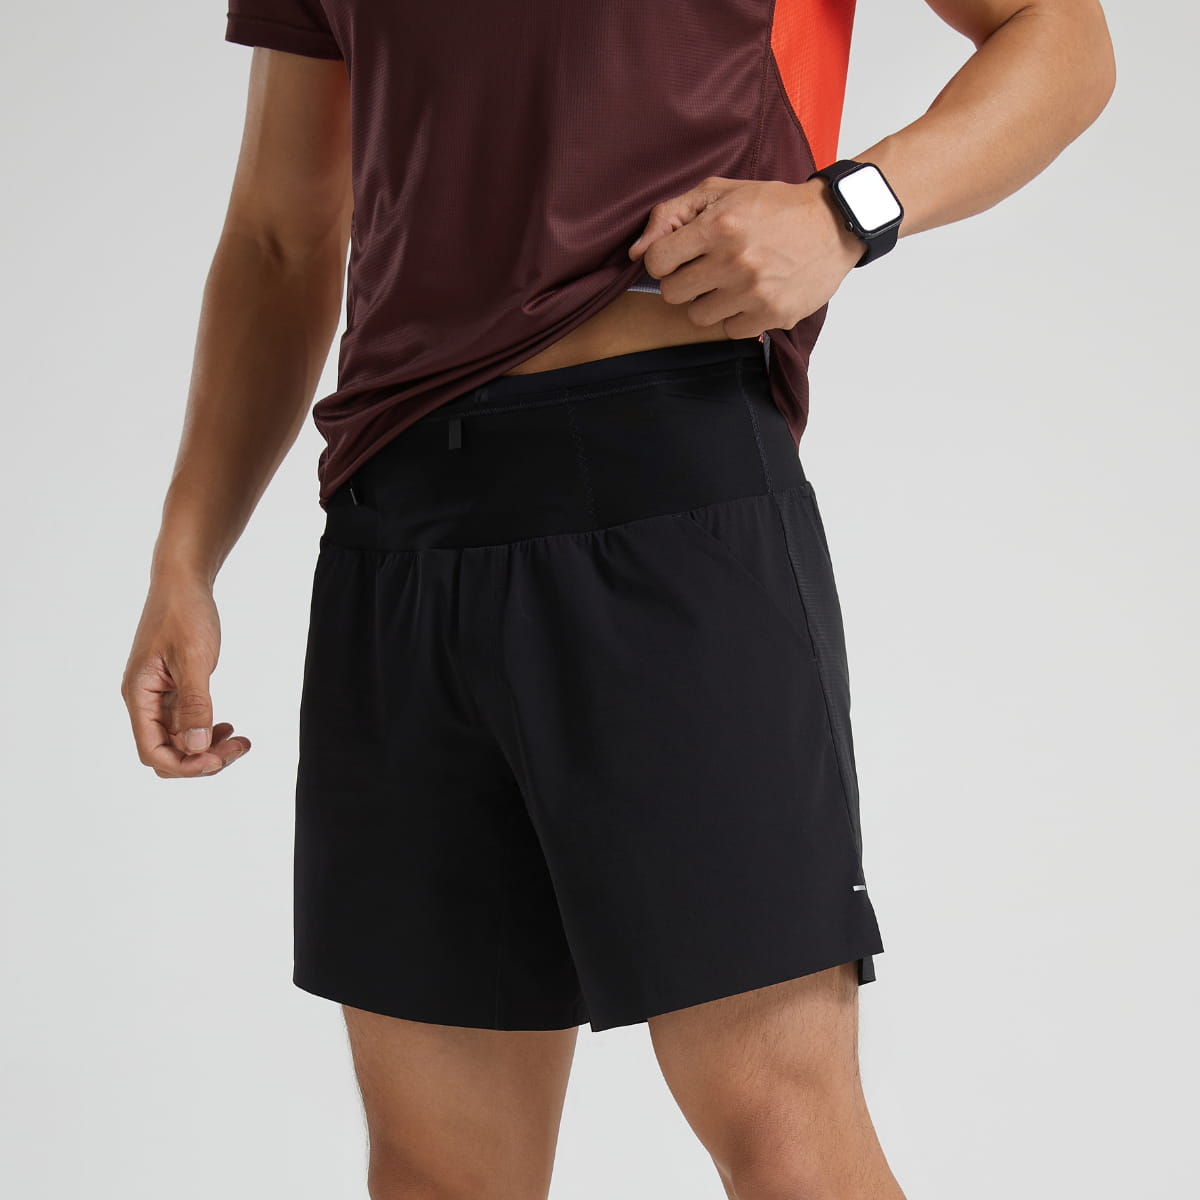 Men's Reflective Running Shorts - RUN Squared